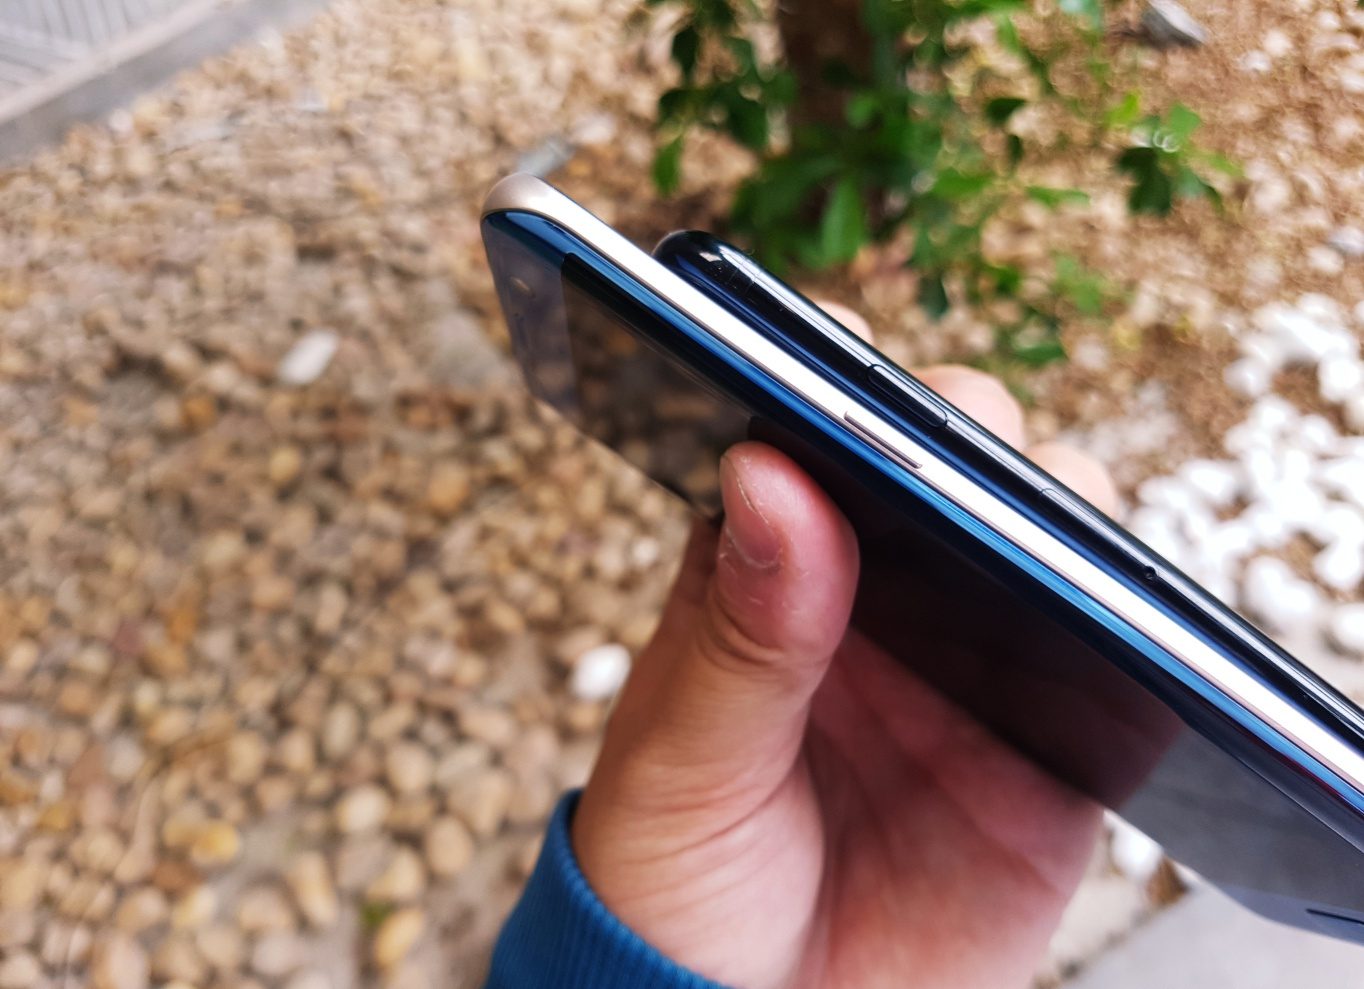 Galaxy S7 Edge Blue Coral và iPhone 7 Jet Black